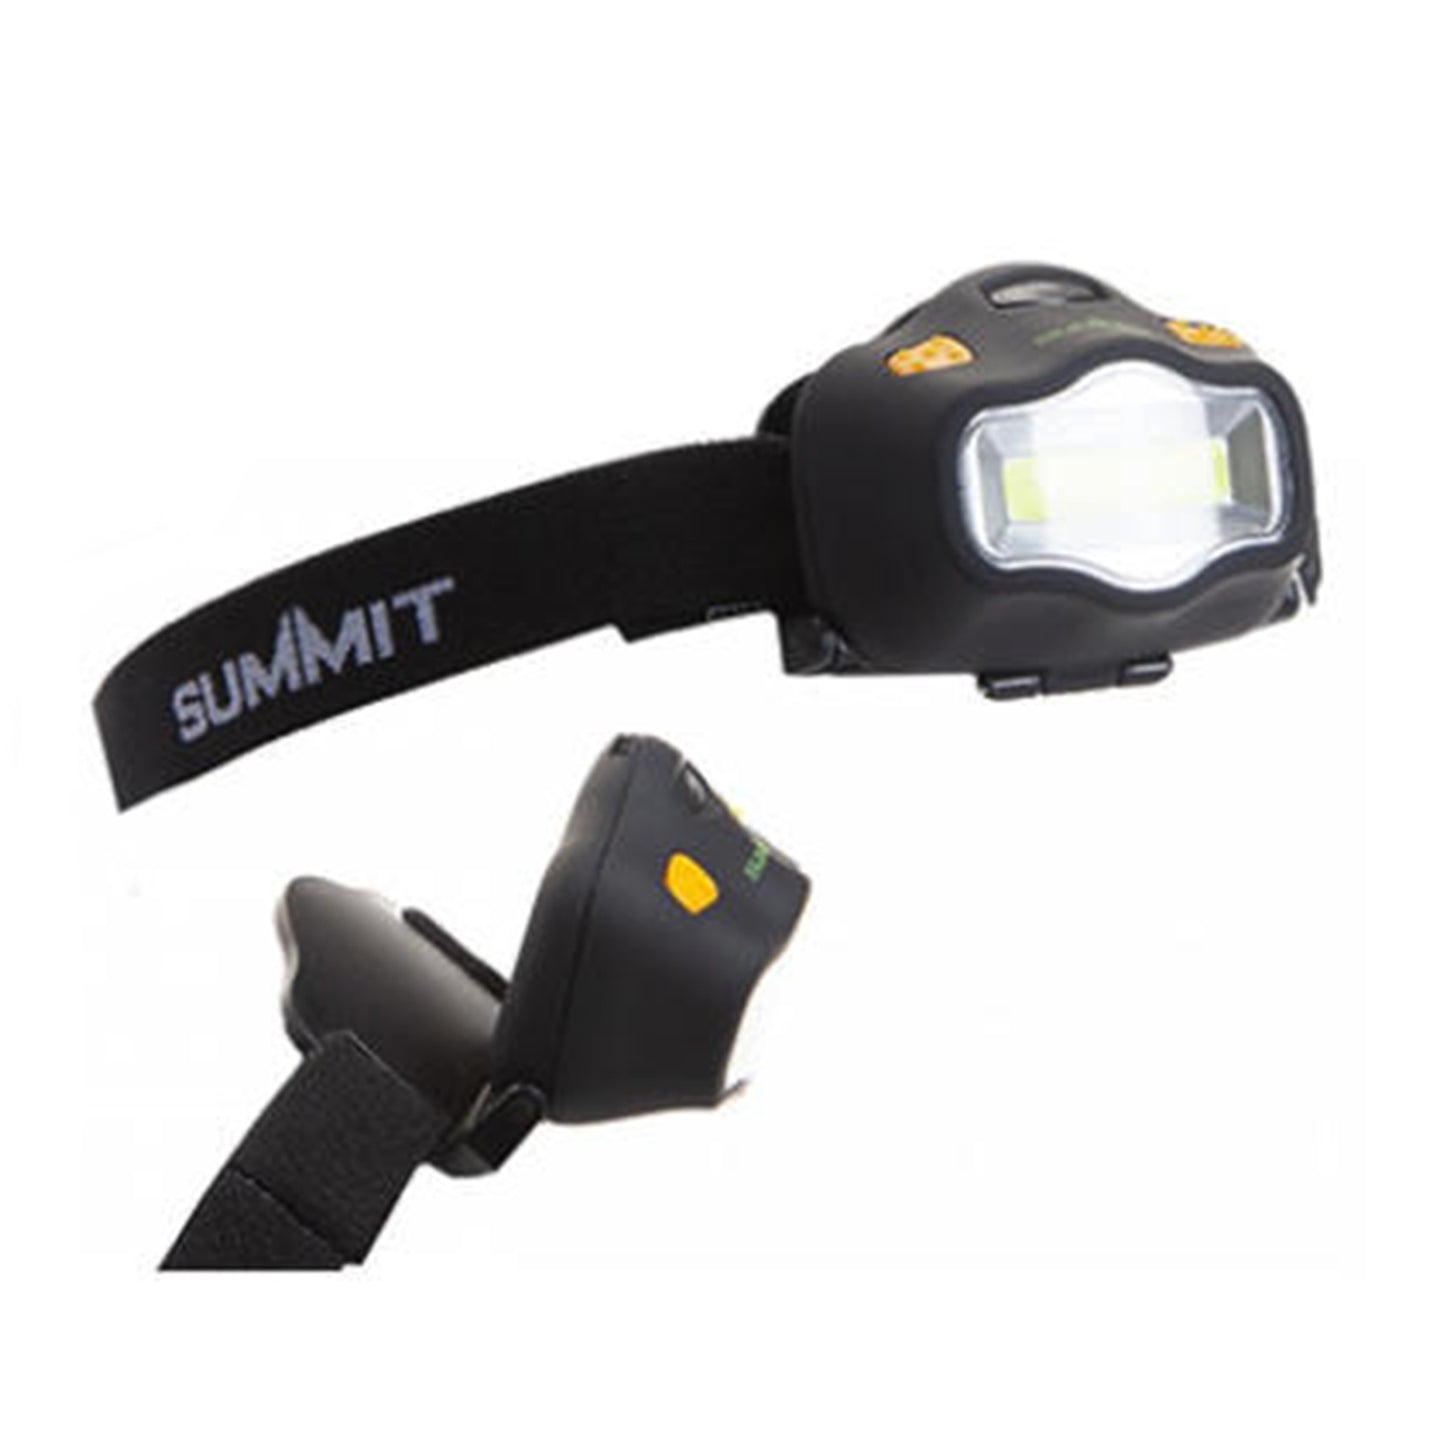 Summit 3W COB LED Headlamp Torch with 3 Light Modes